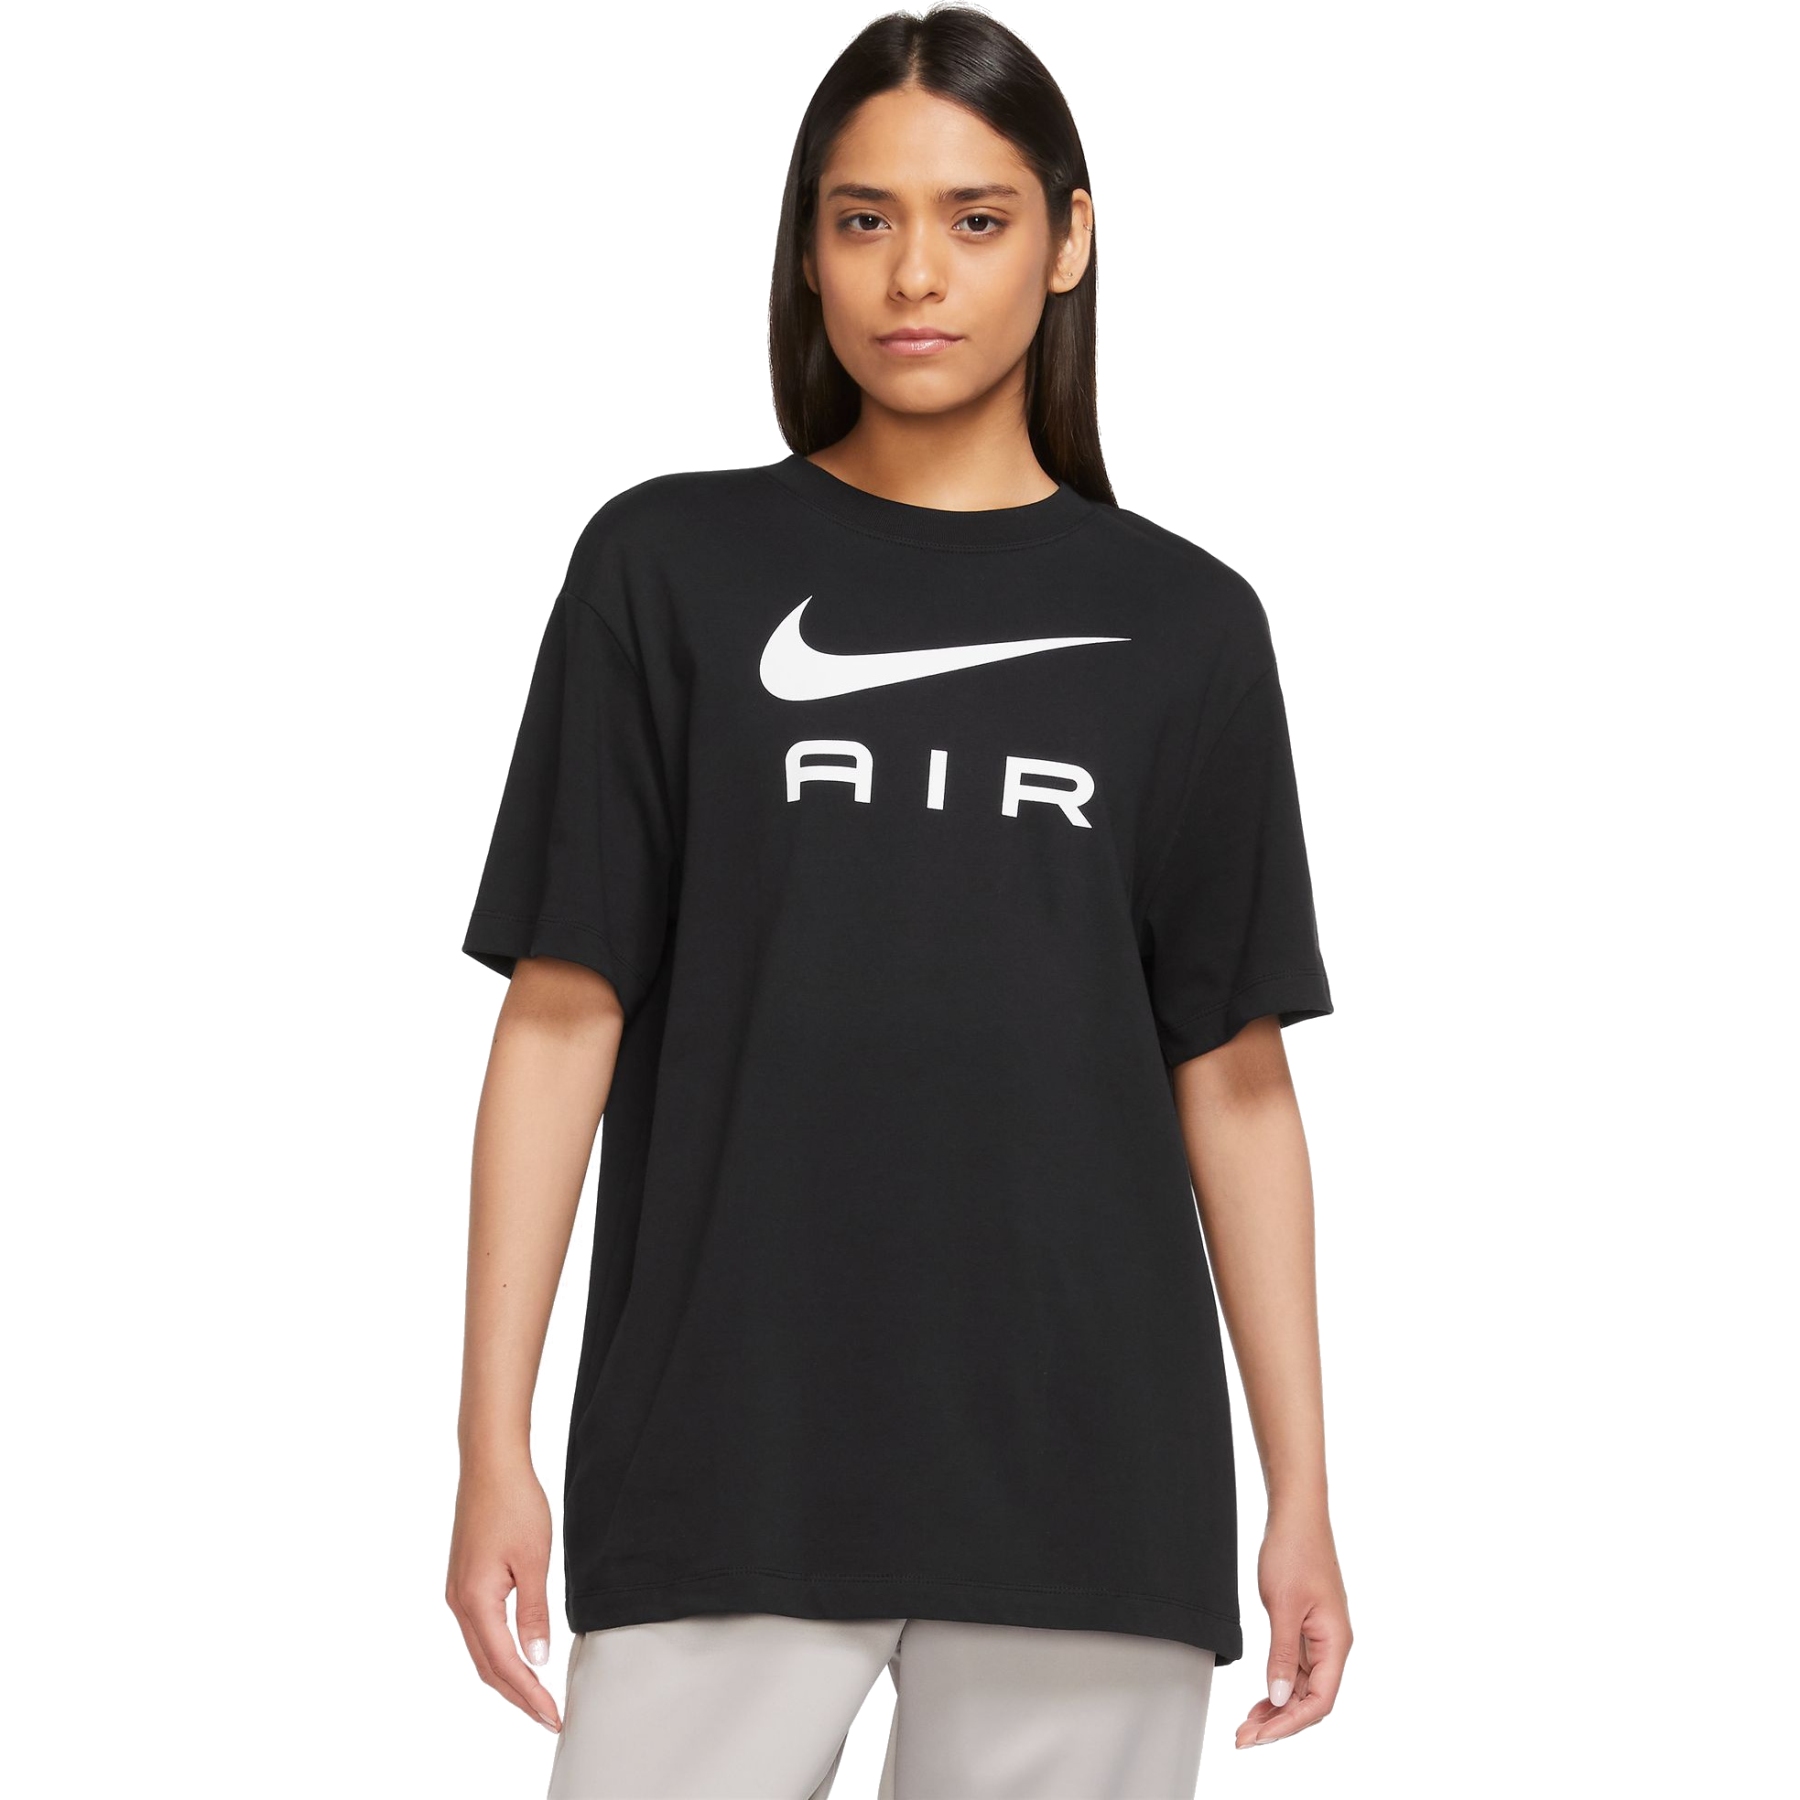 Nike Air T-Shirt Women - black DX7918-010 | BIKE24